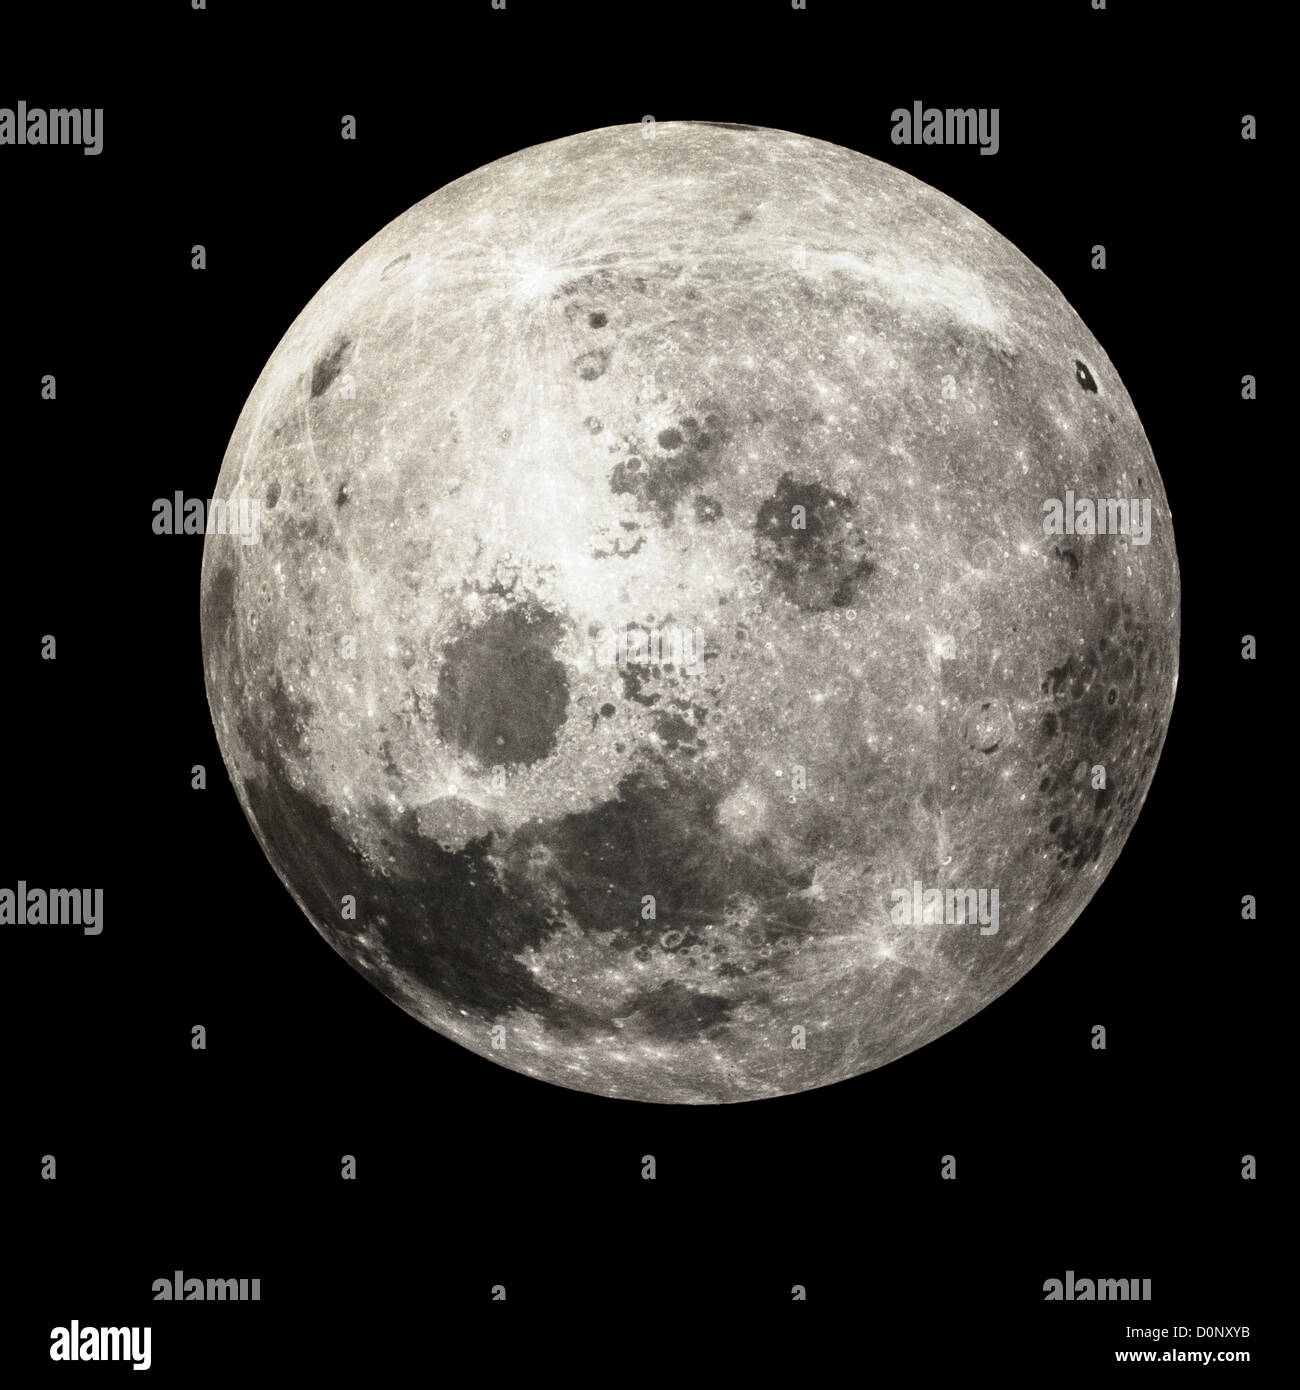 Apollo 13 - The Moon From a Non-Earth Perspective Stock Photo